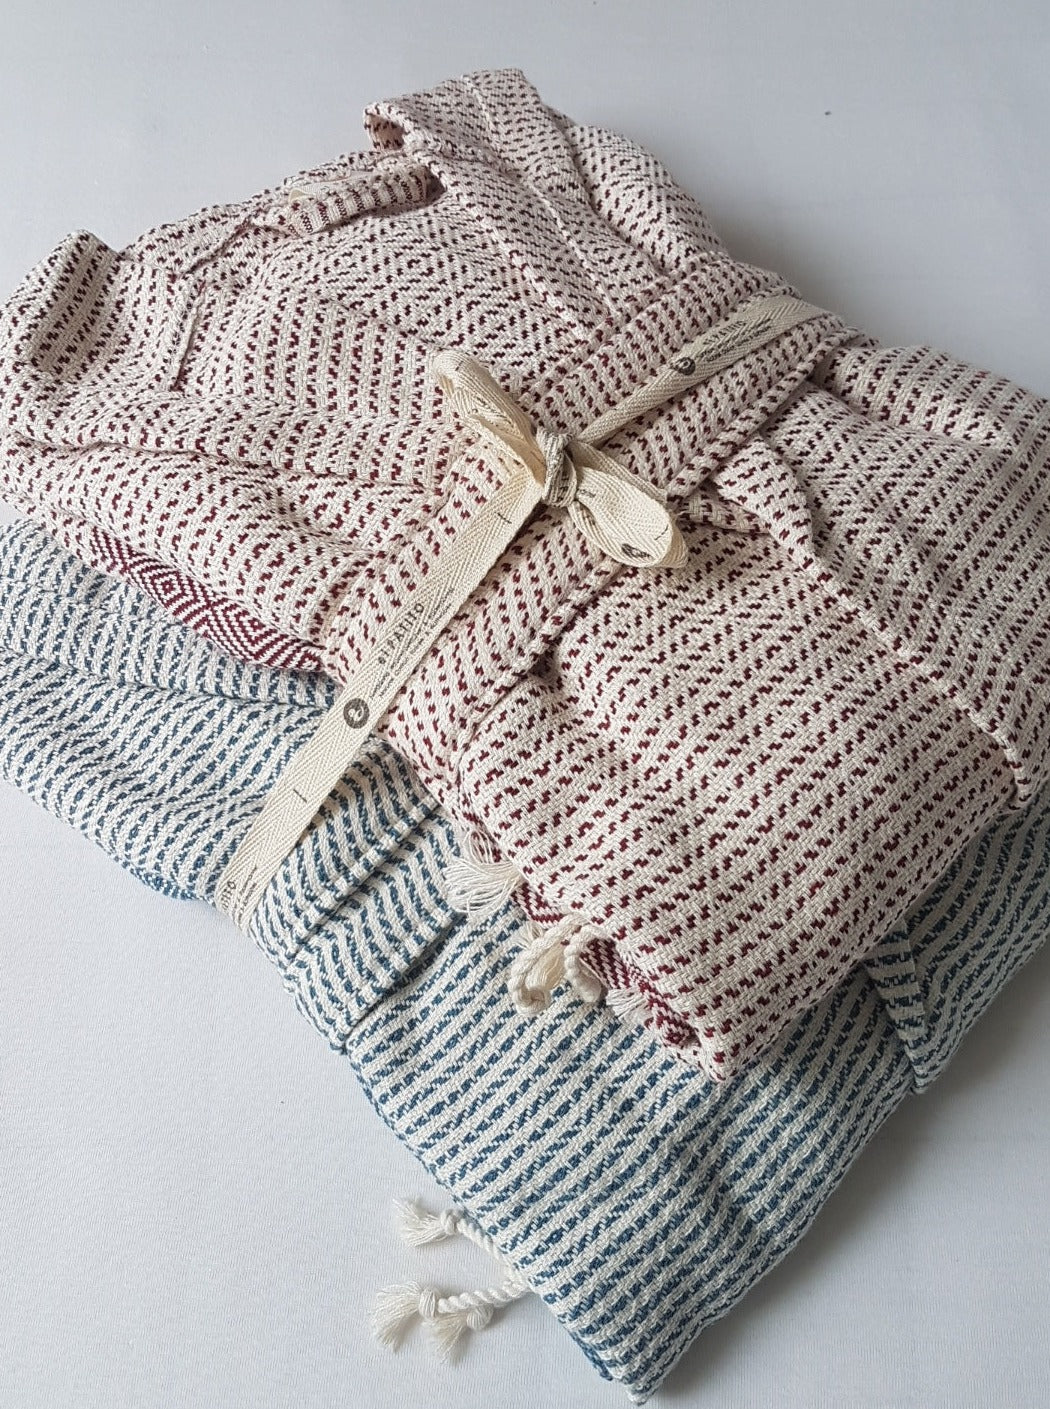 el patito towels and bathrobes nordic series diamonds dots pattern 100% natural turkish cotton machine washable gift ideas